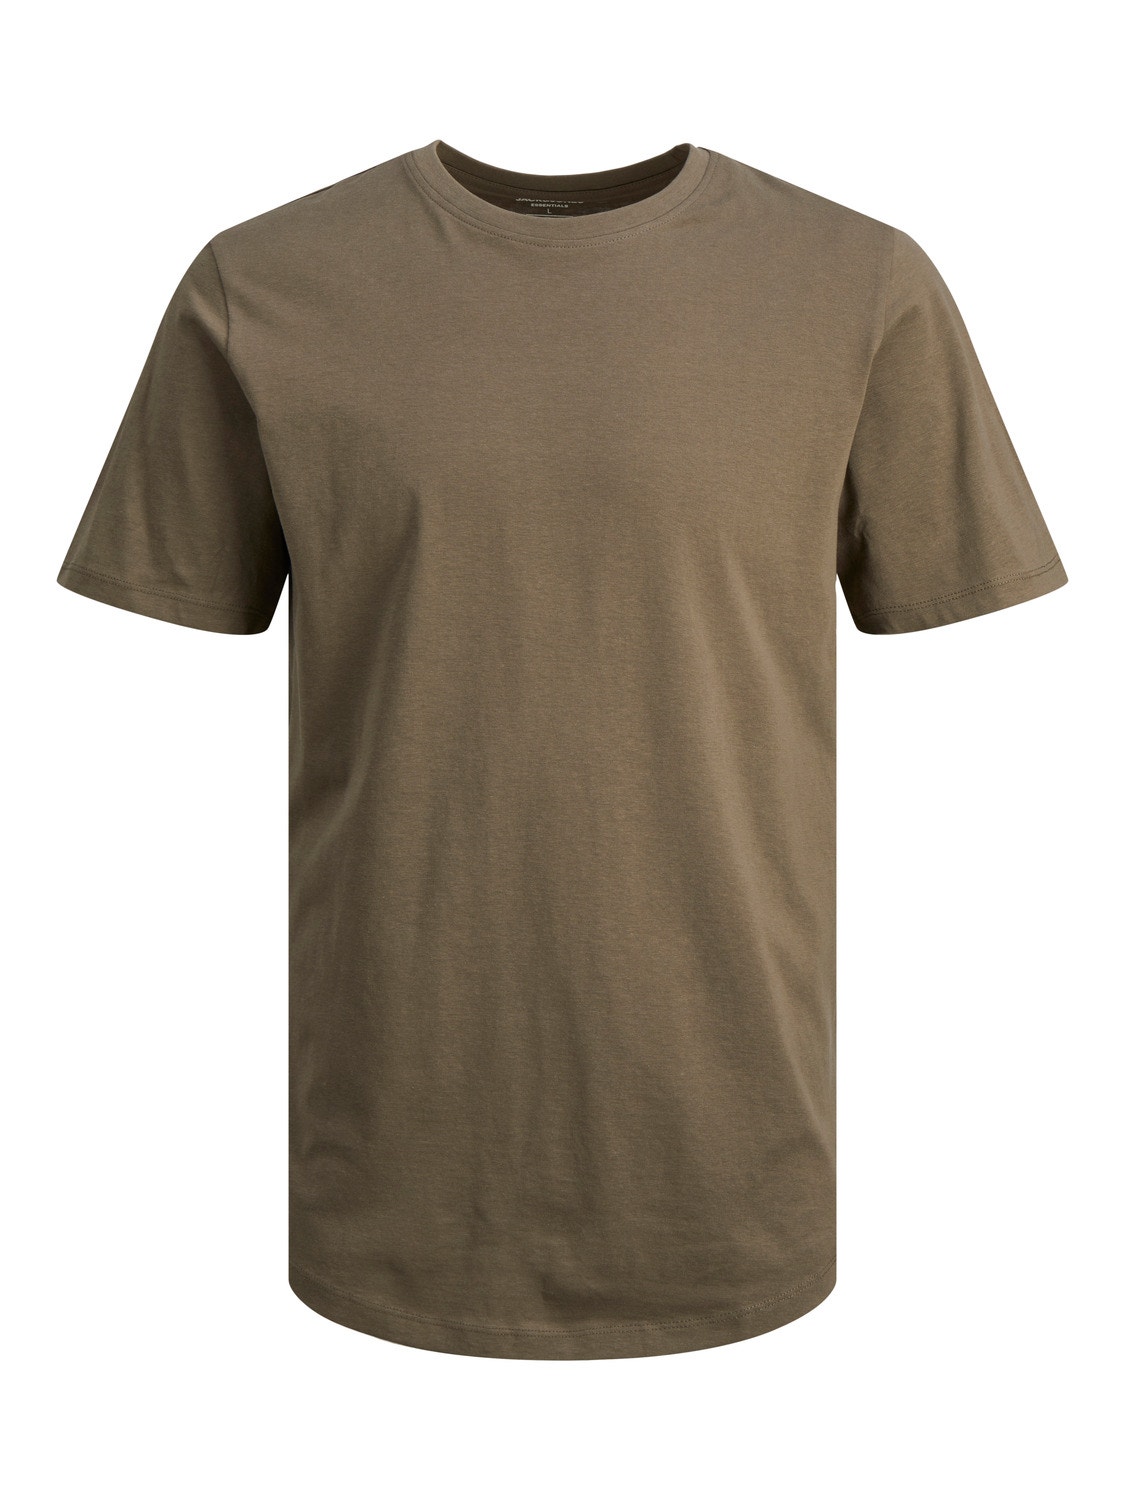 Jack & Jones Plain Crew neck T-shirt -Bungee Cord - 12113648